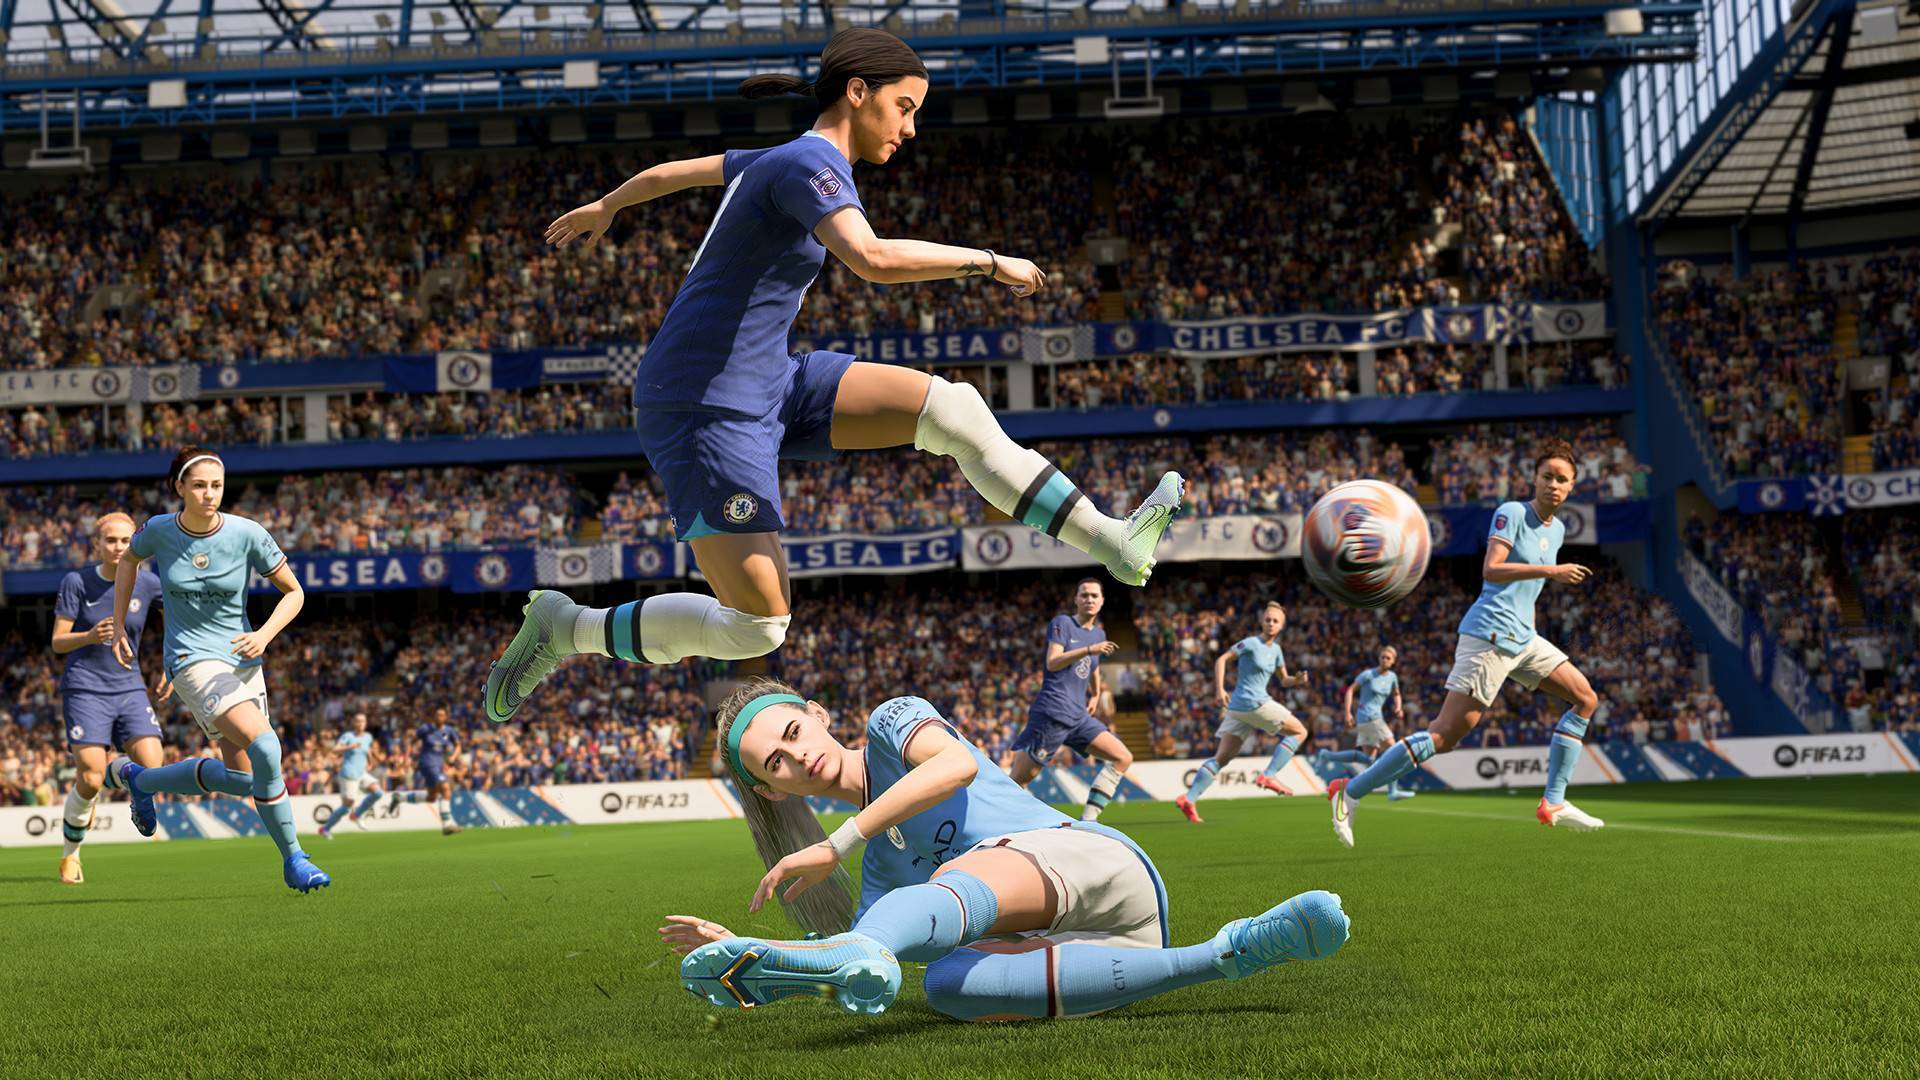 FIFA 23 Standard Edition - Xbox One - Download Code + FIFA 23